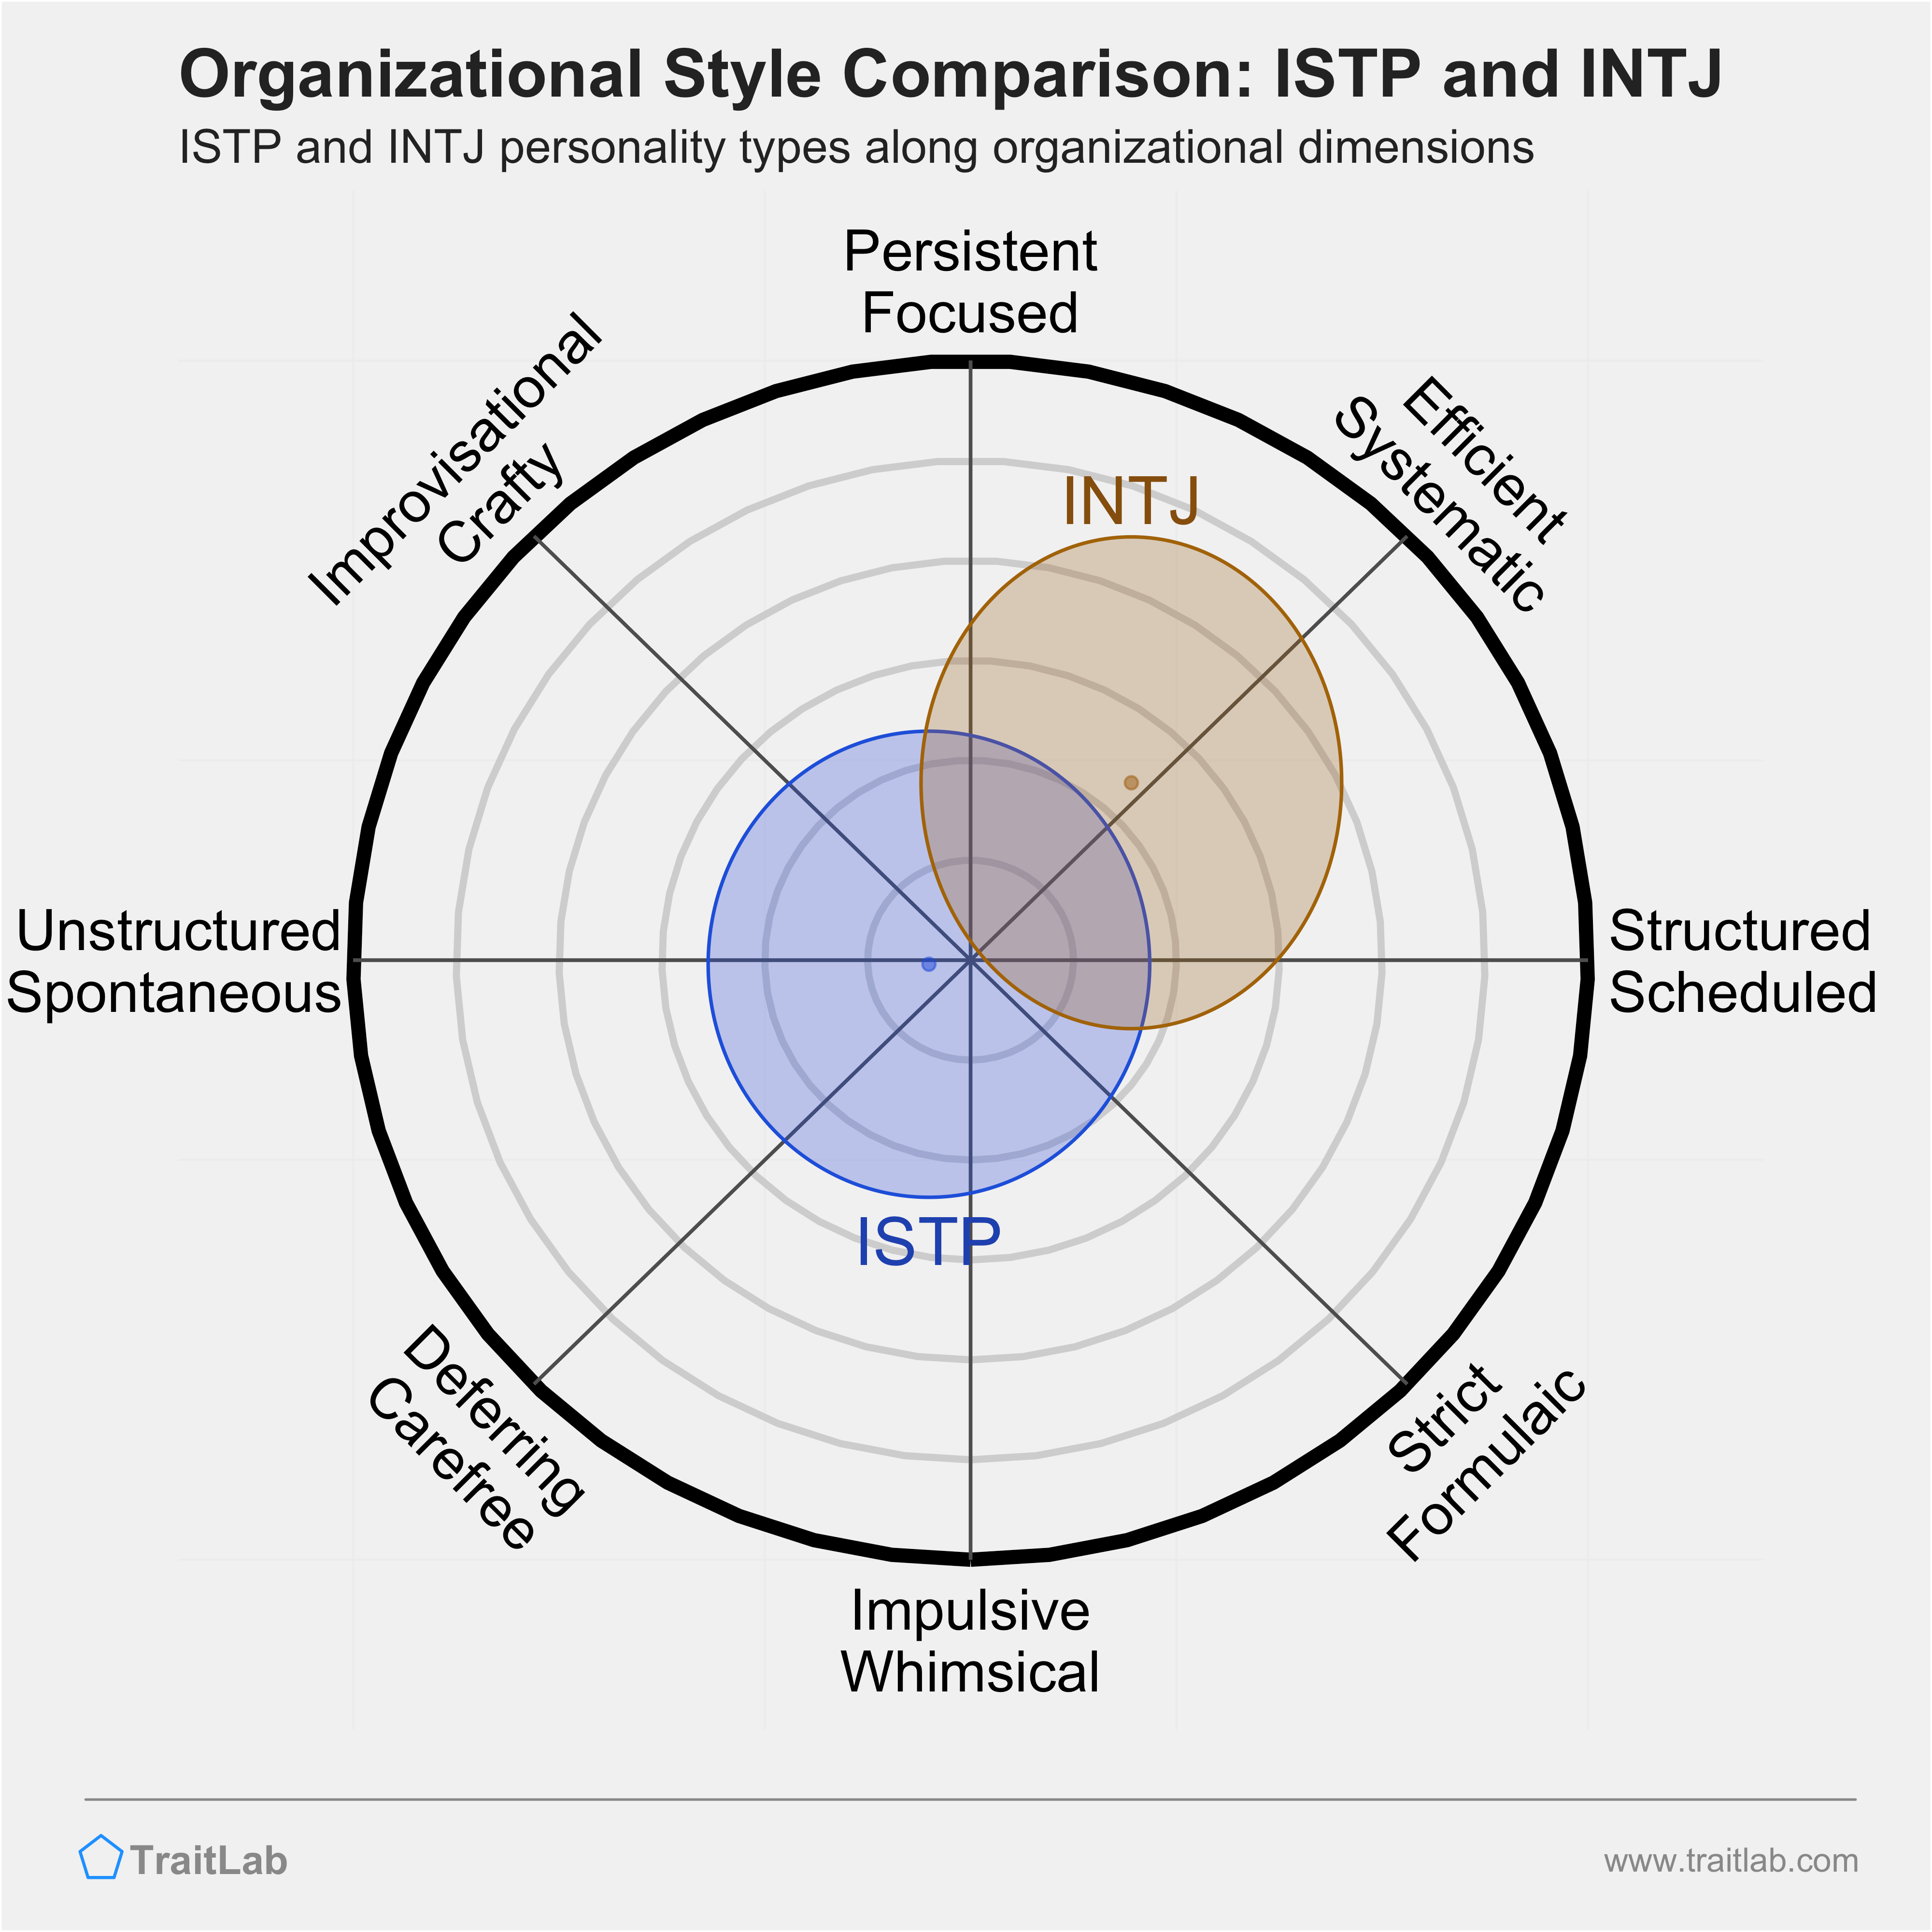 ISTP and INTJ comparison across organizational dimensions